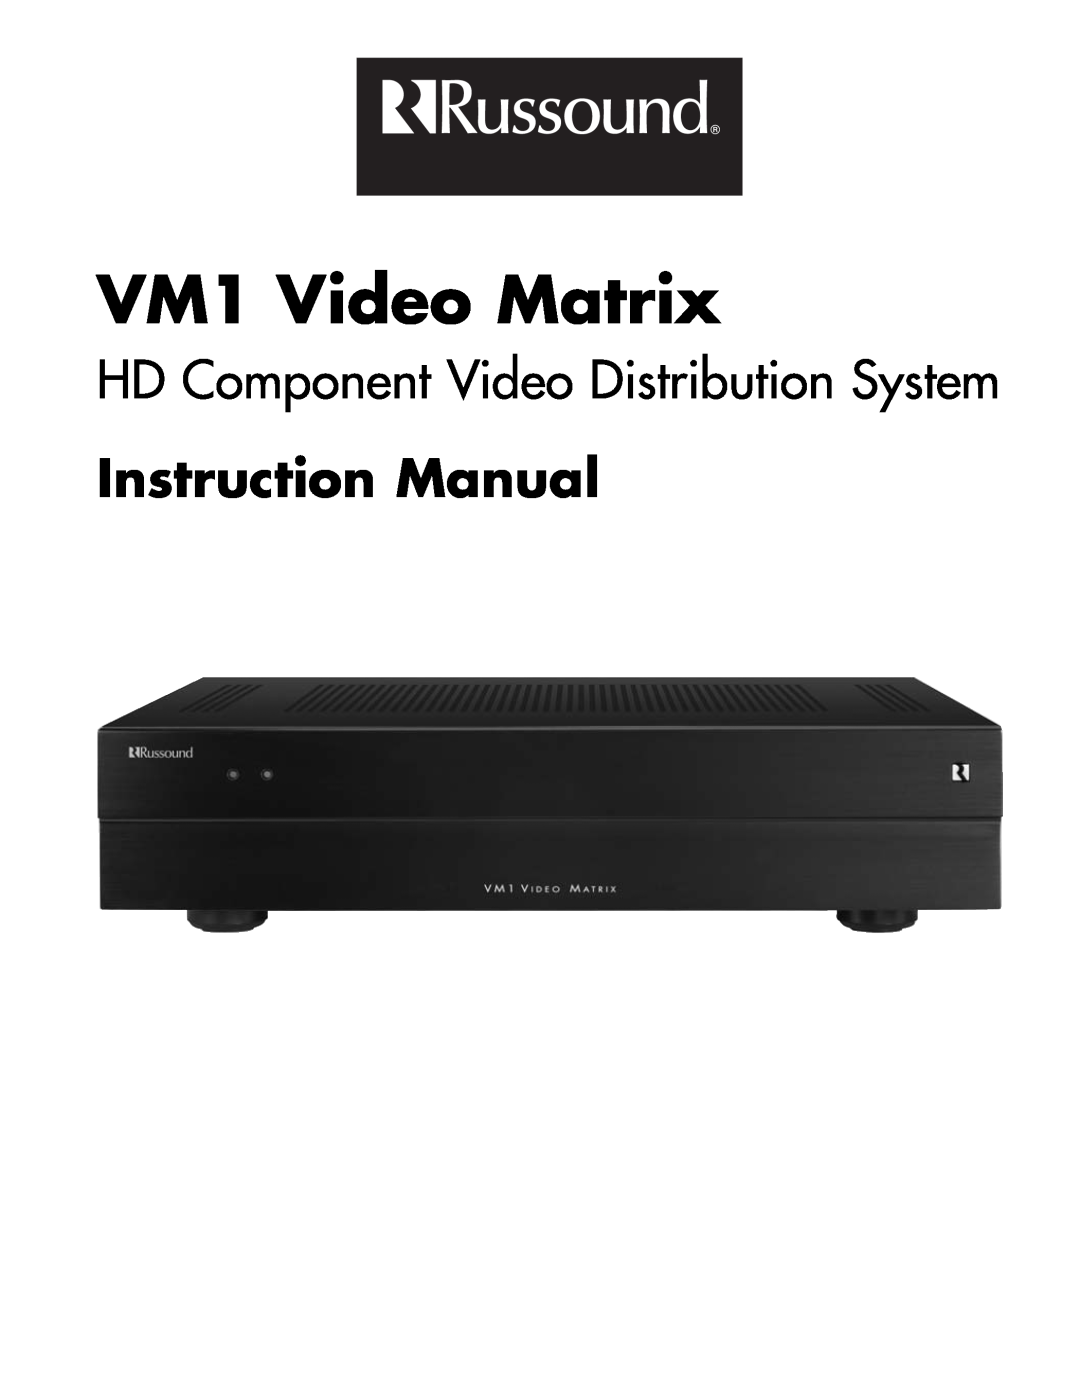 Russound manual Instruction Manual, VM1 Video Matrix, HD Component Video Distribution System 